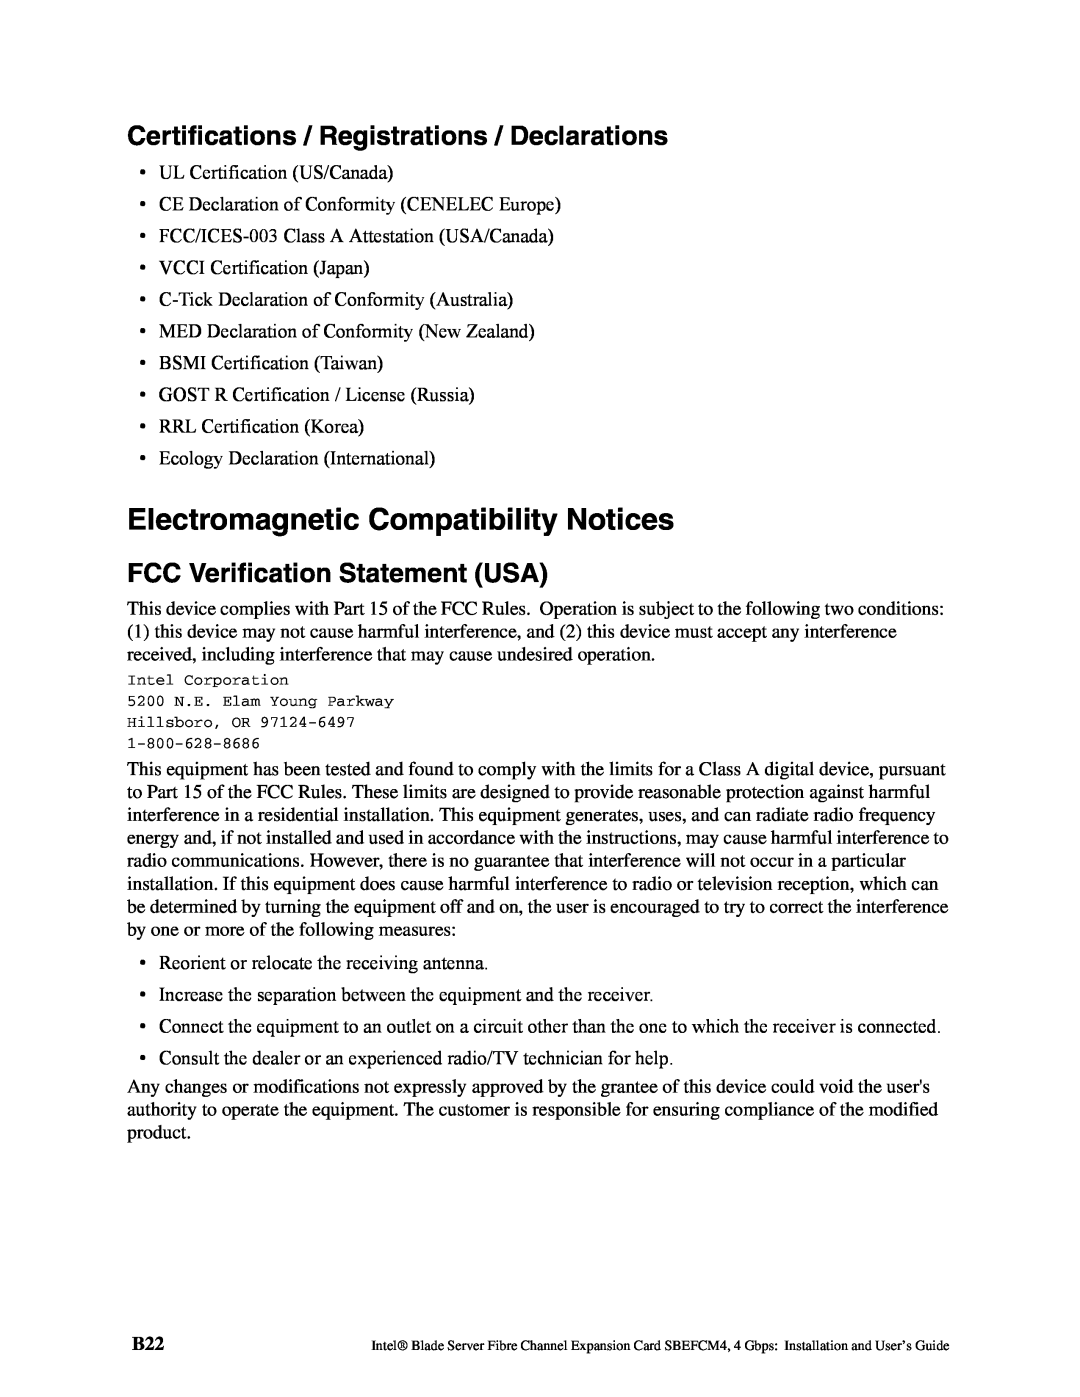 Intel SEBFCM4 manual Electromagnetic Compatibility Notices, Certifications / Registrations / Declarations 